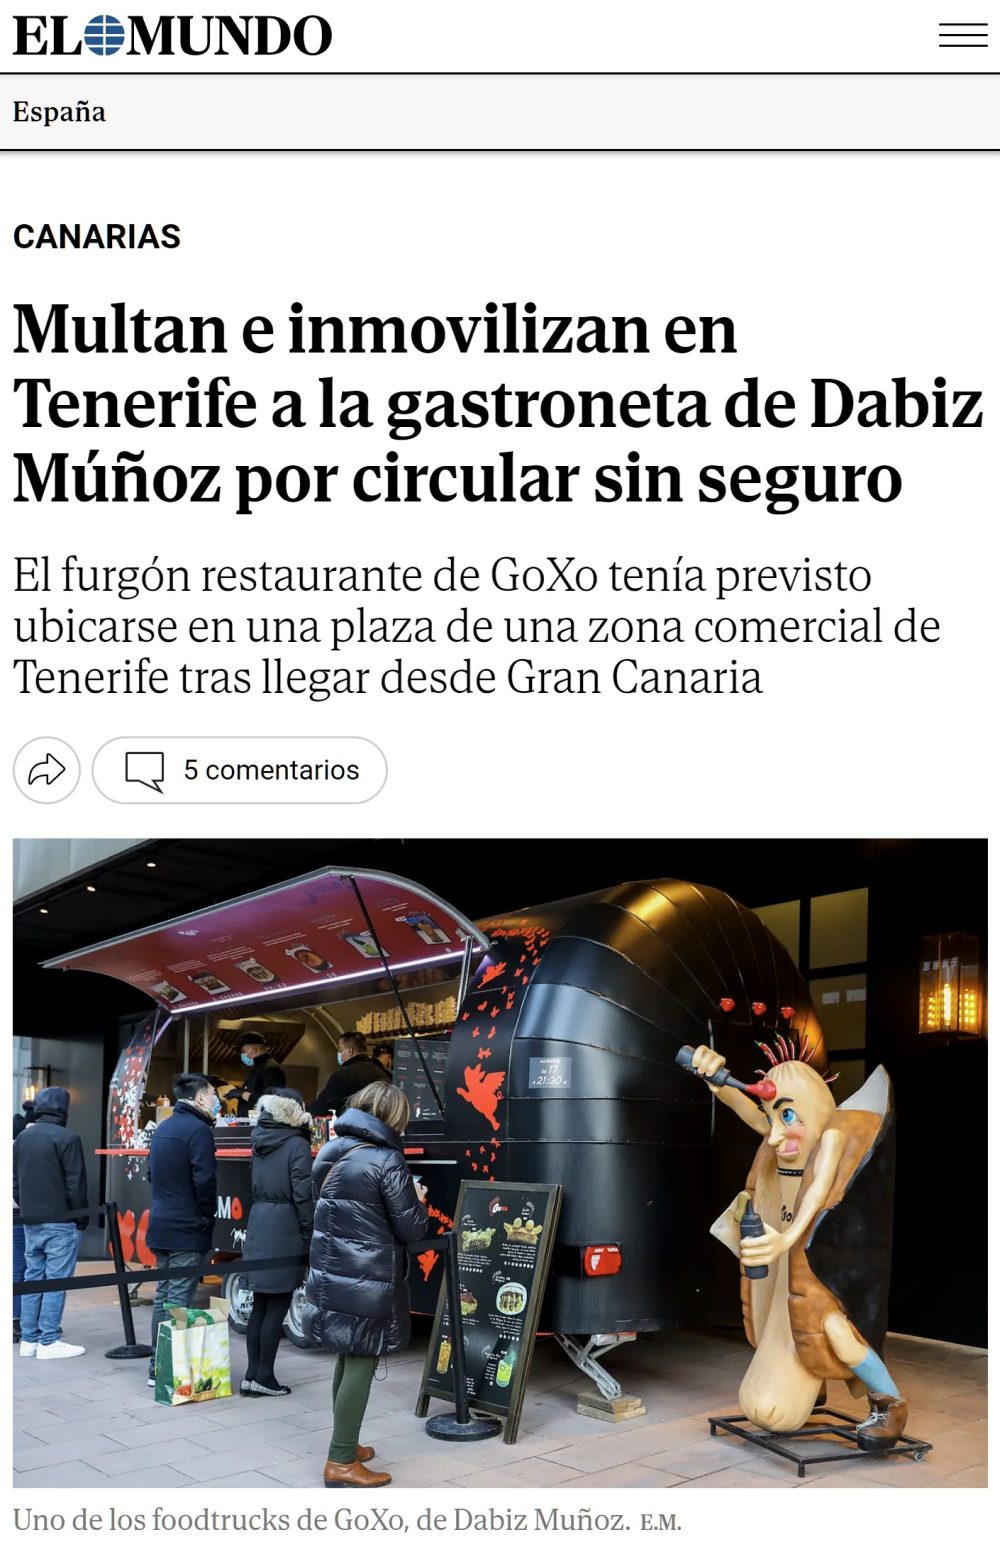 Multan e inmovilizan la furgoneta garstronómica de Dabiz Muñoz por circular sin seguro.